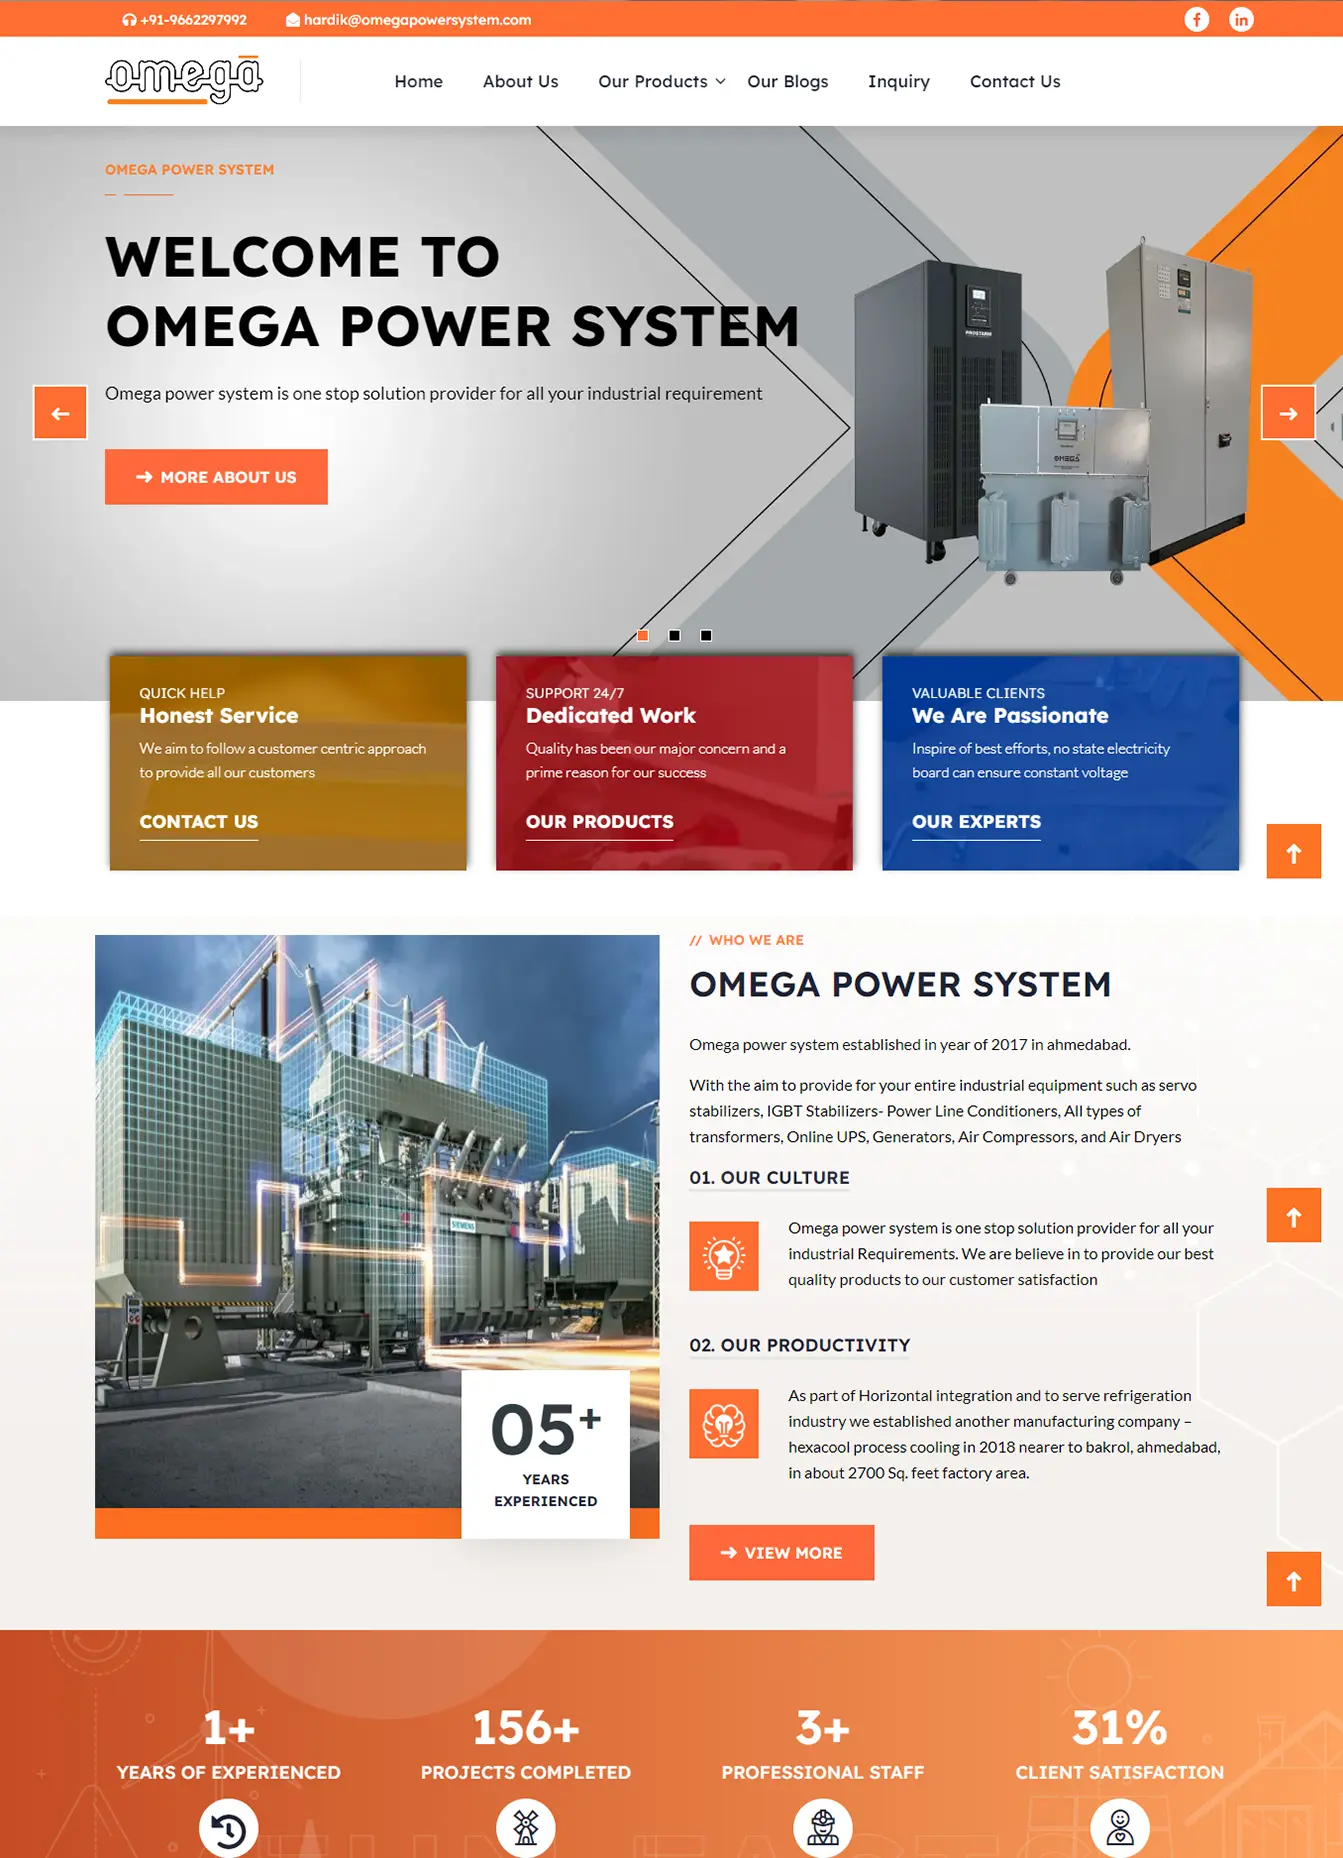 Omega power system